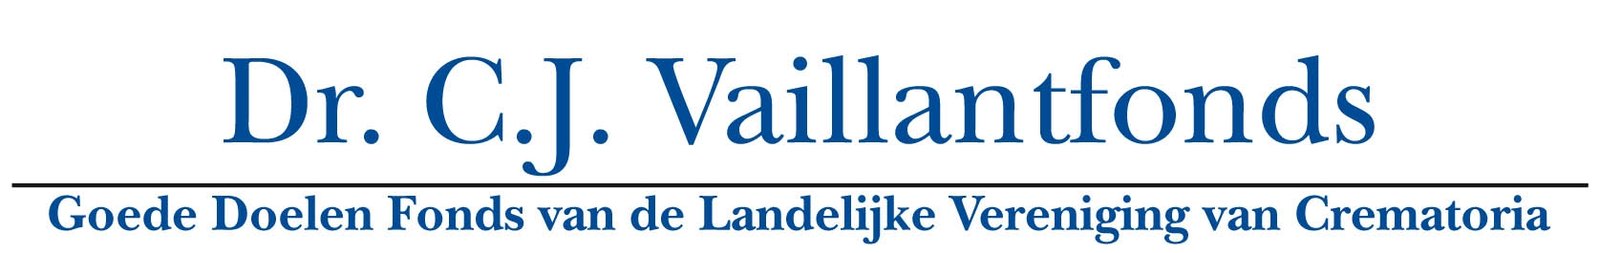 Logo Dr. C.J. Vaillantfonds